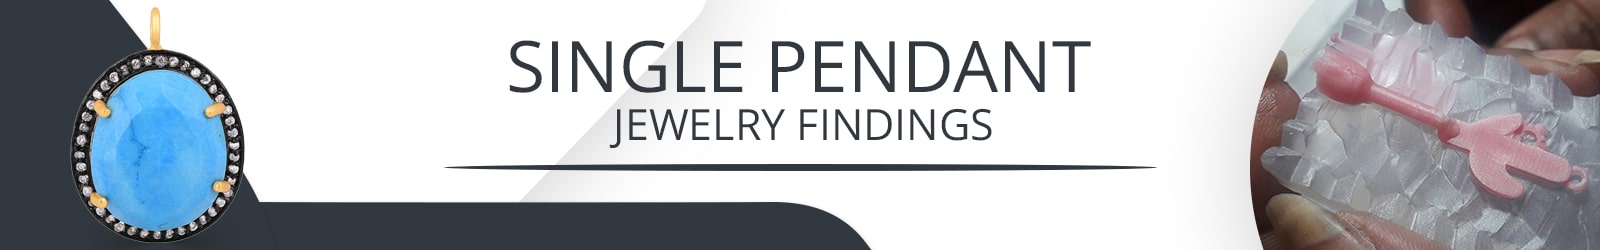 Single Pendant Jewelry Findings